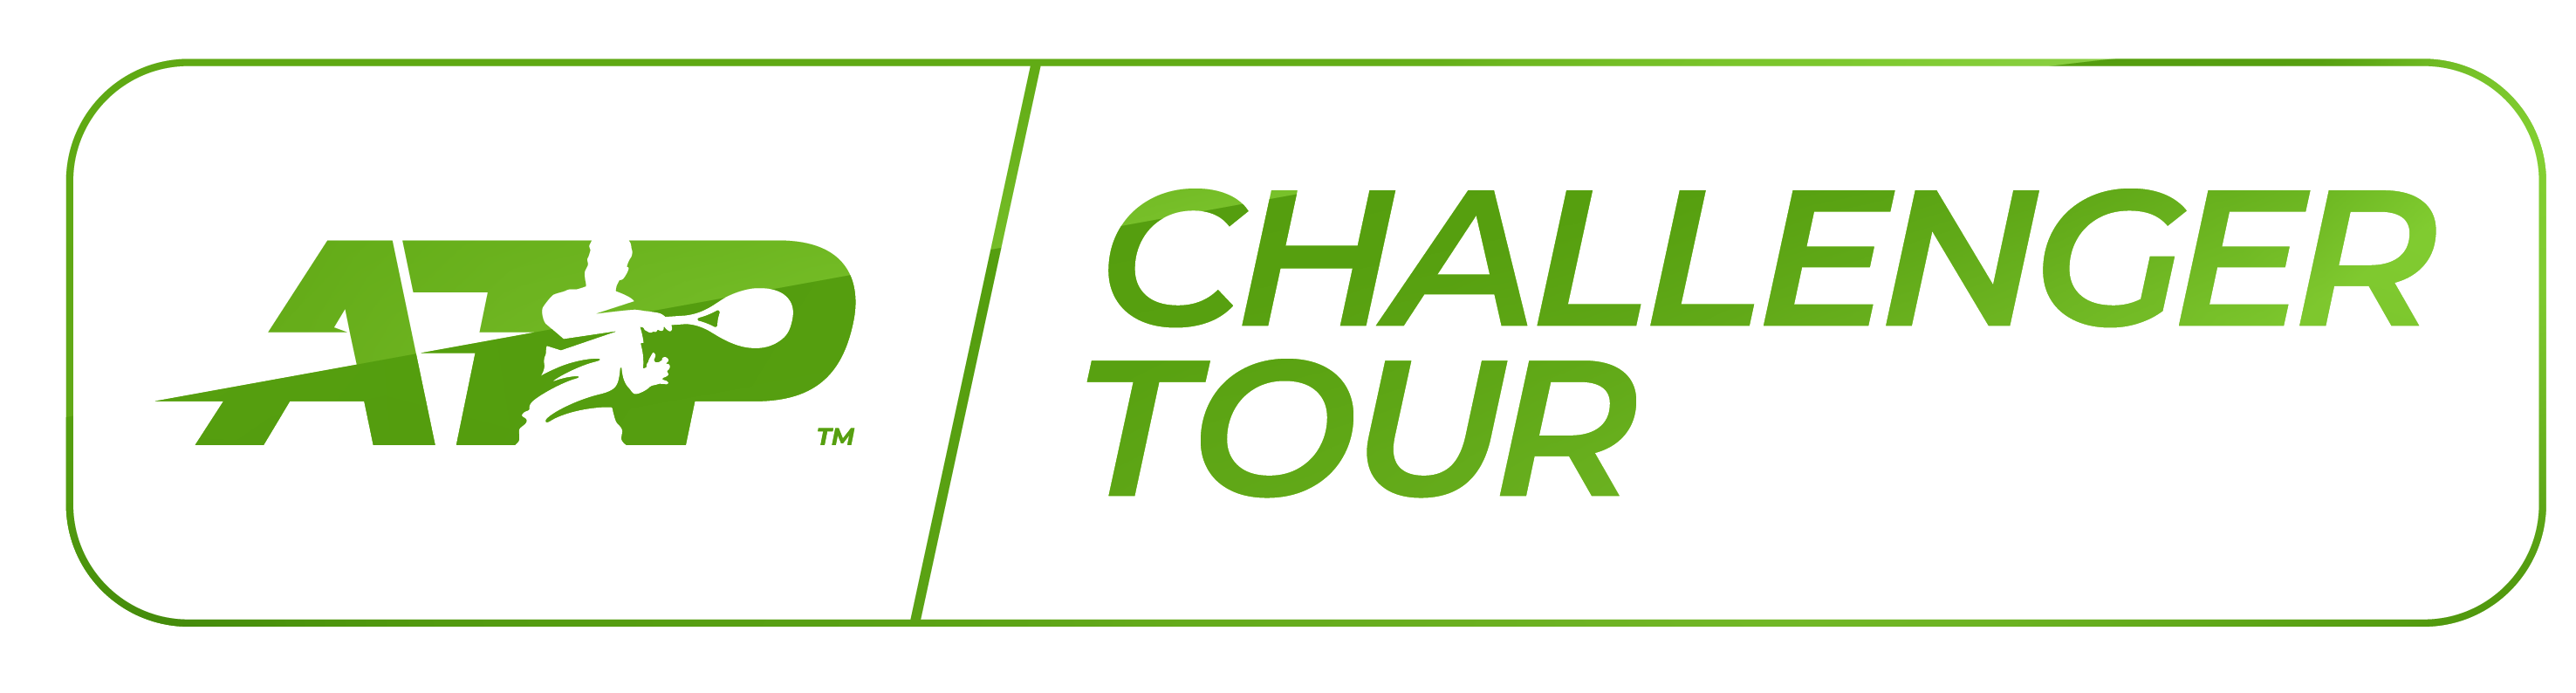 ATP Challenger Tour logo invert